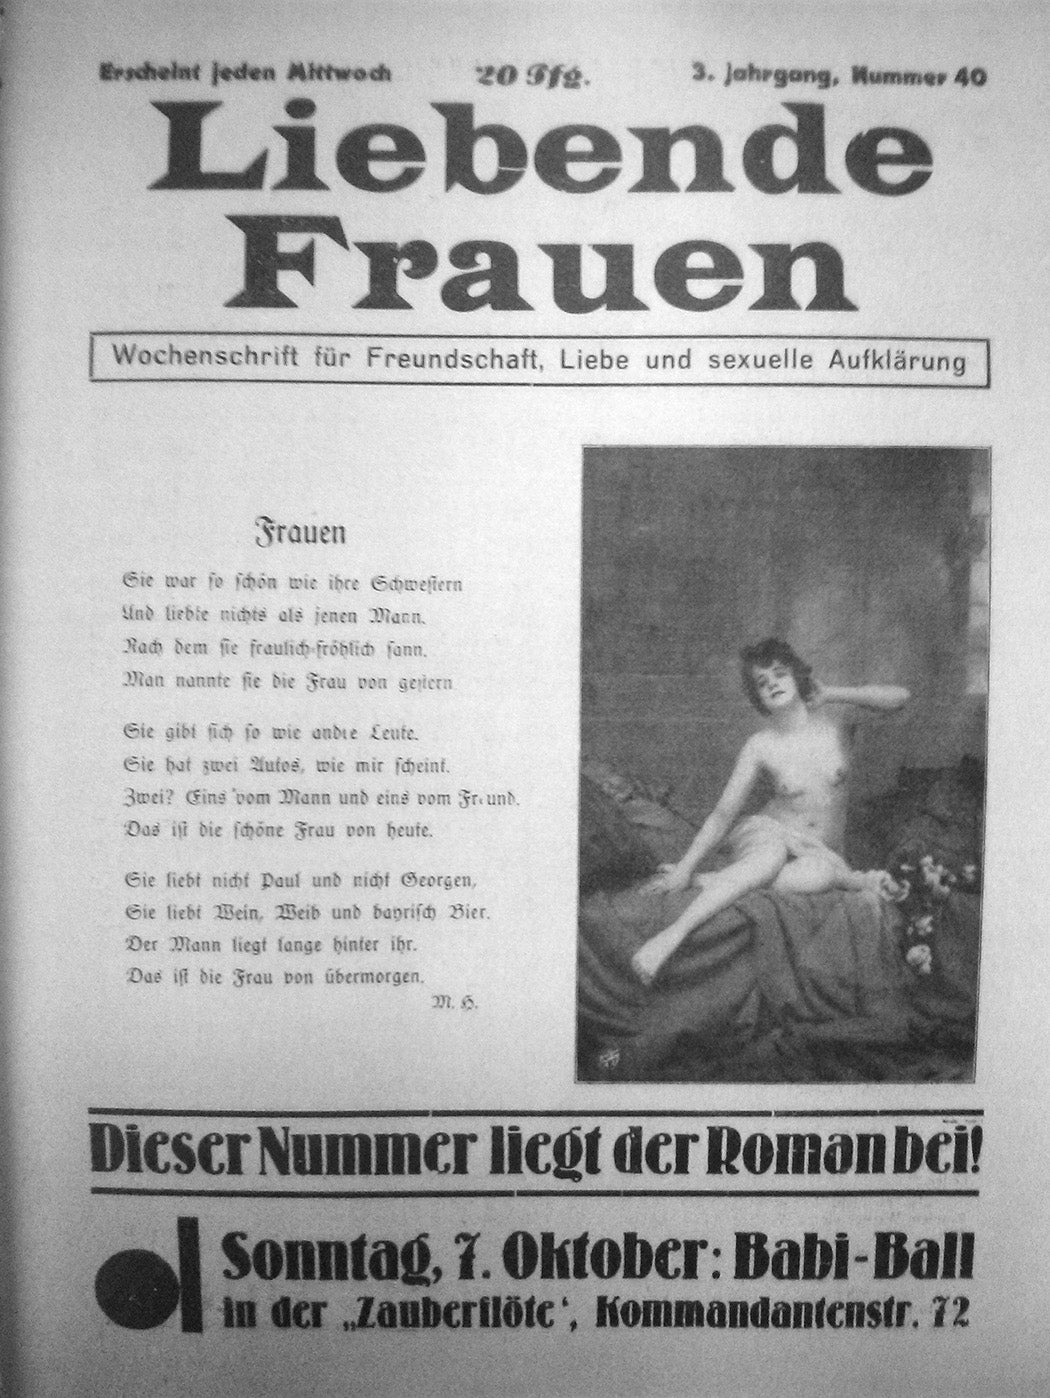 From the lesbian magazine Liebende Frauen, Berlin, 1928